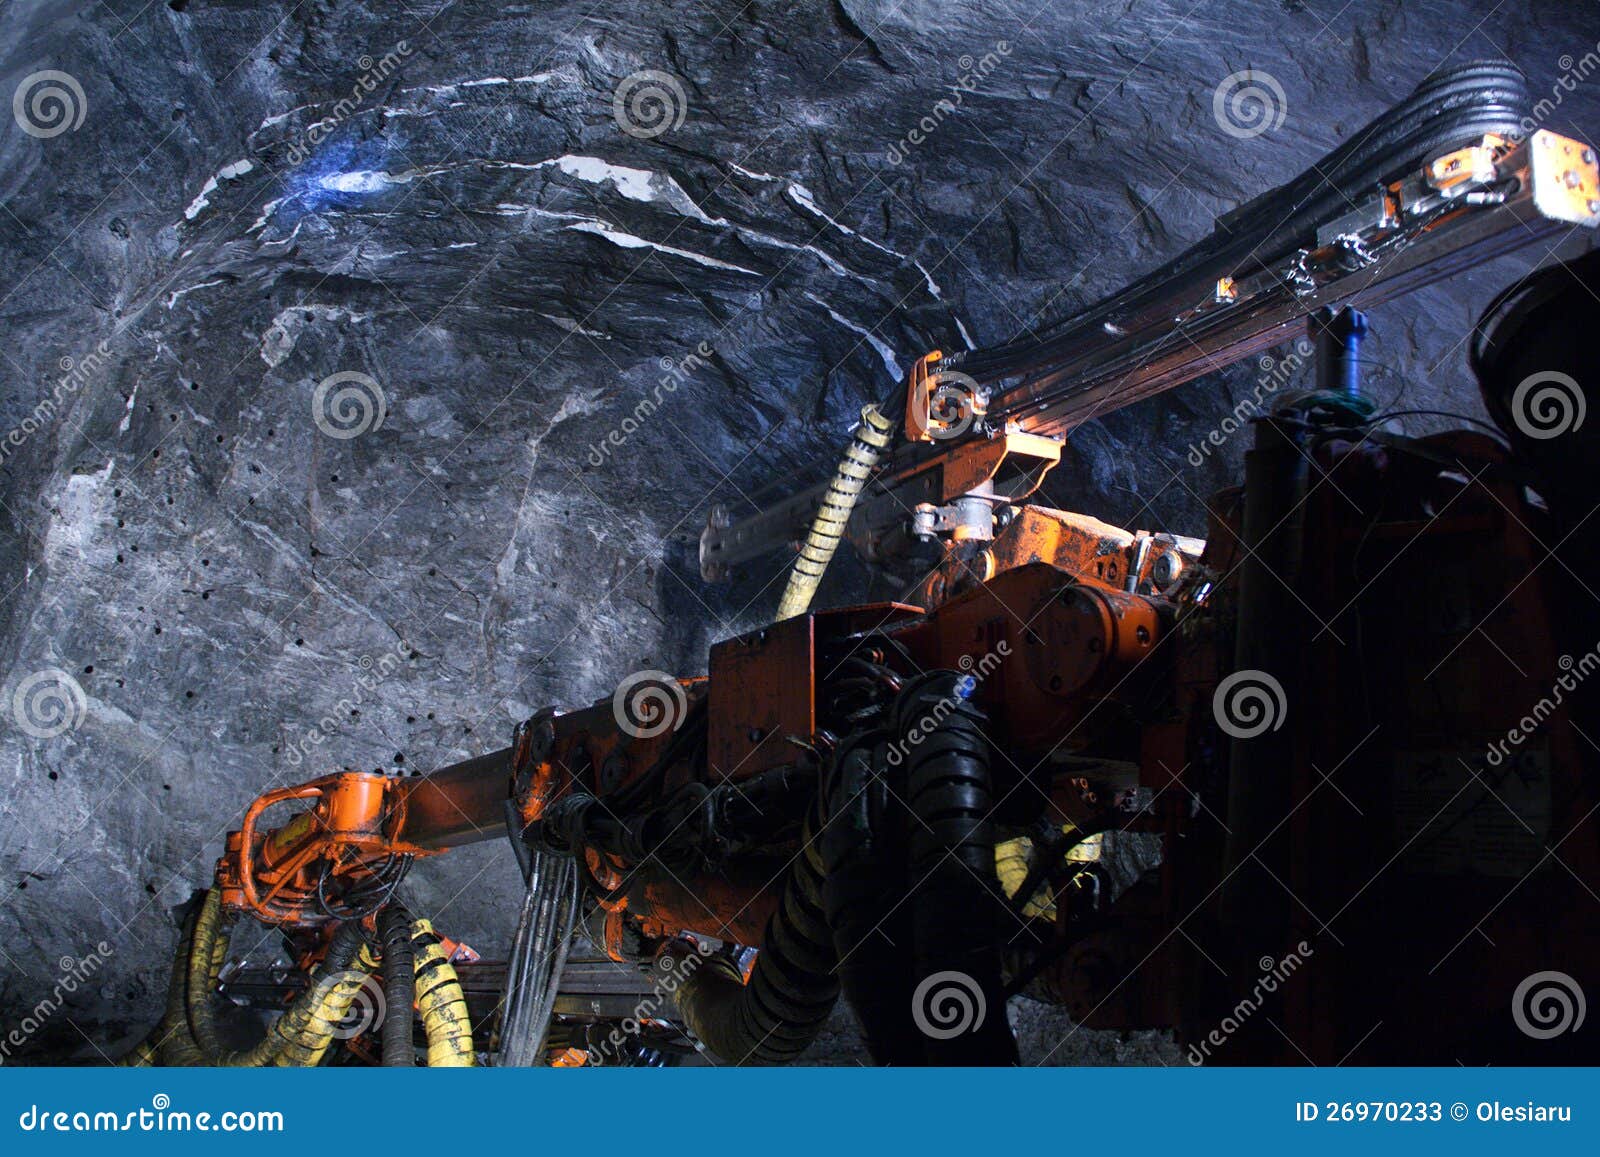 mining machine for blast-hole drilling